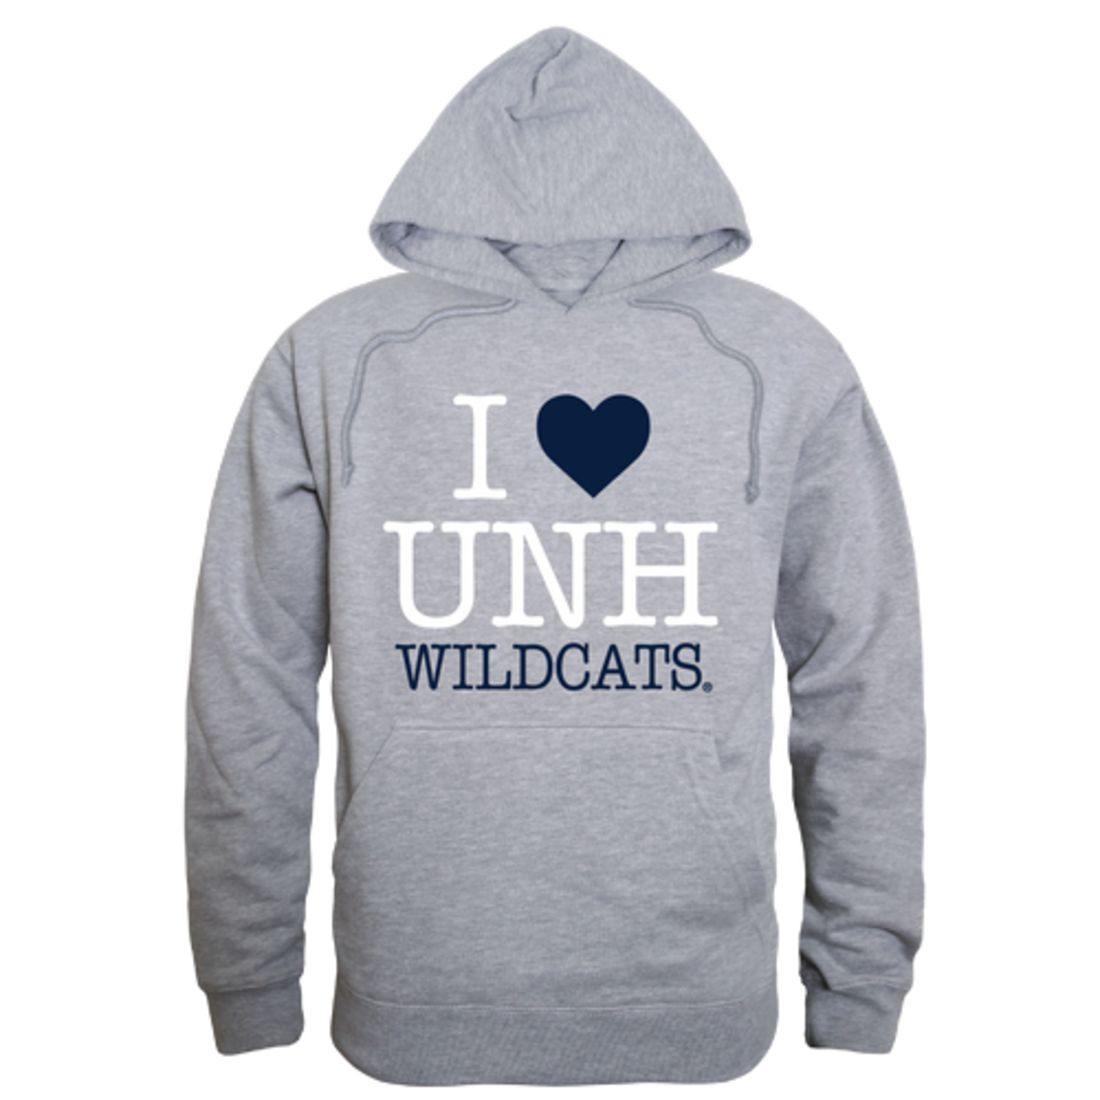 I Love UNH University of New Hampshire Wildcats Hoodie Sweatshirt-Campus-Wardrobe